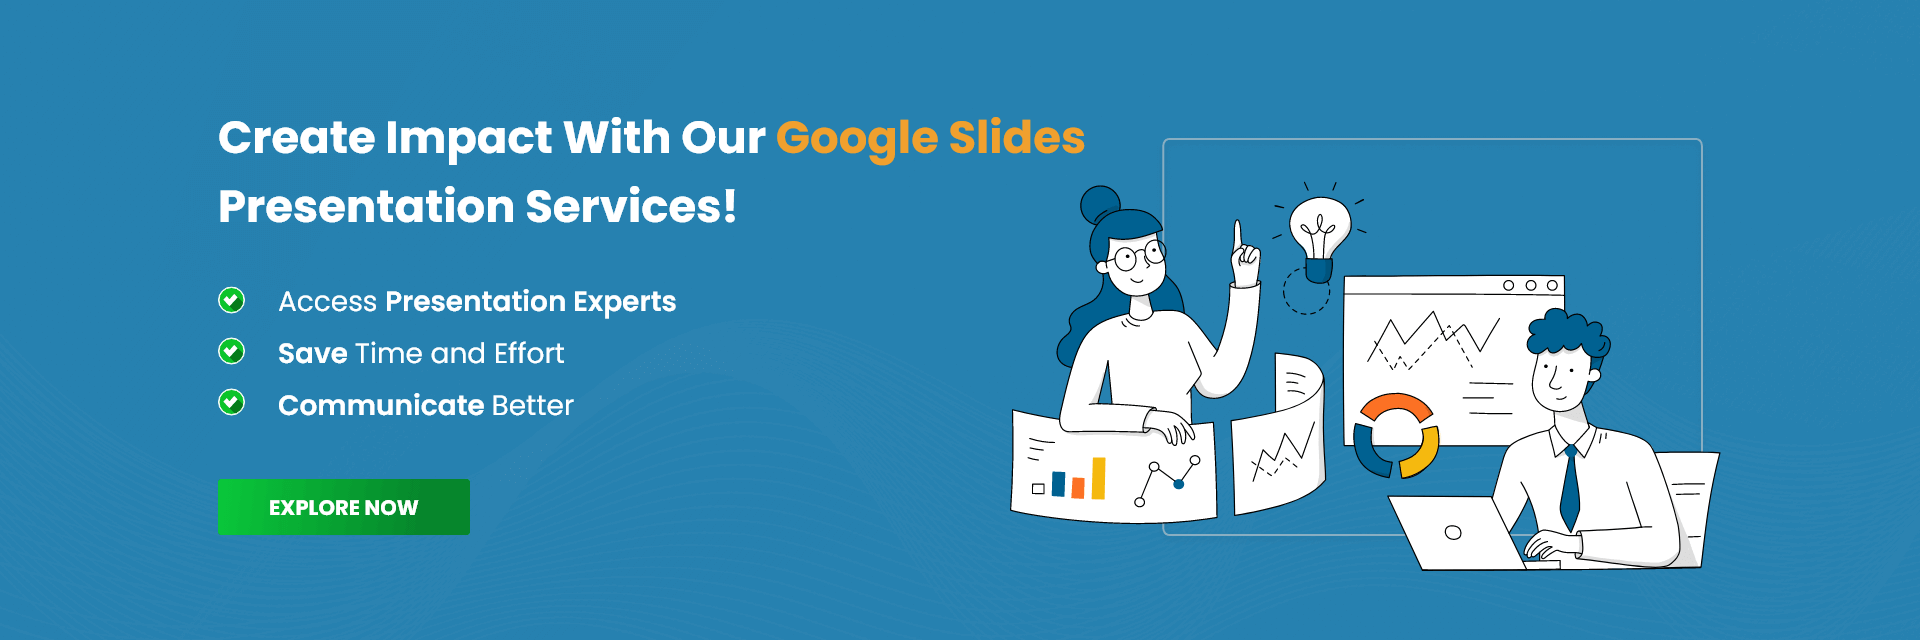 Google Slides Themes - Presentation Services